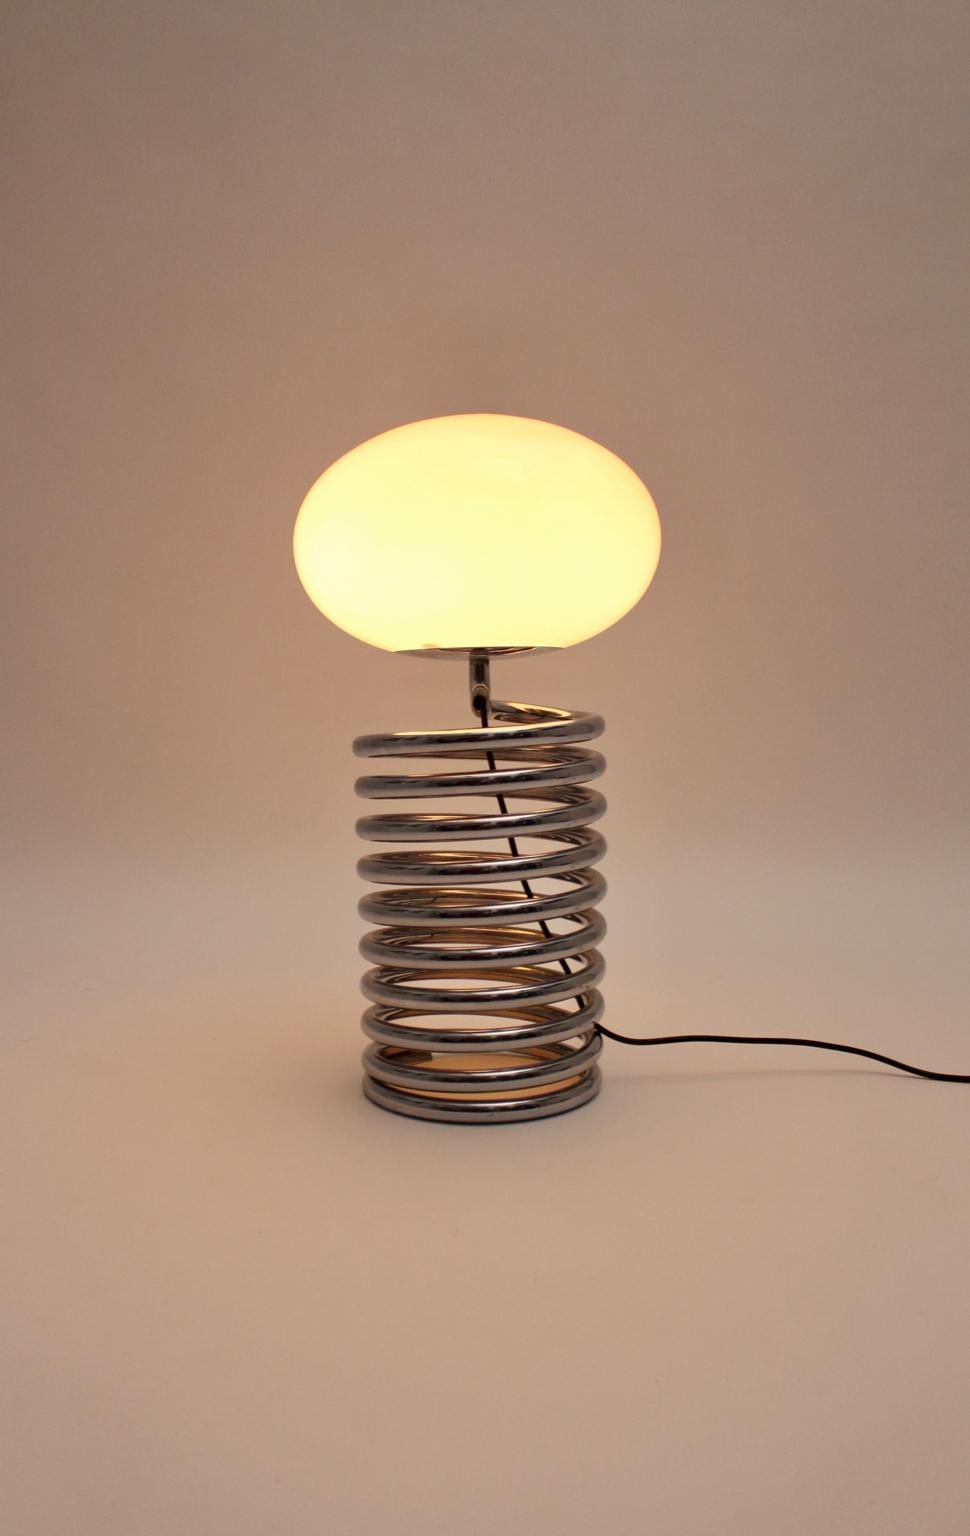 Mid-Century Modern Vintage Chromed Glass Table Lamp by Ingo Maurer 1968, Germany For Sale 3